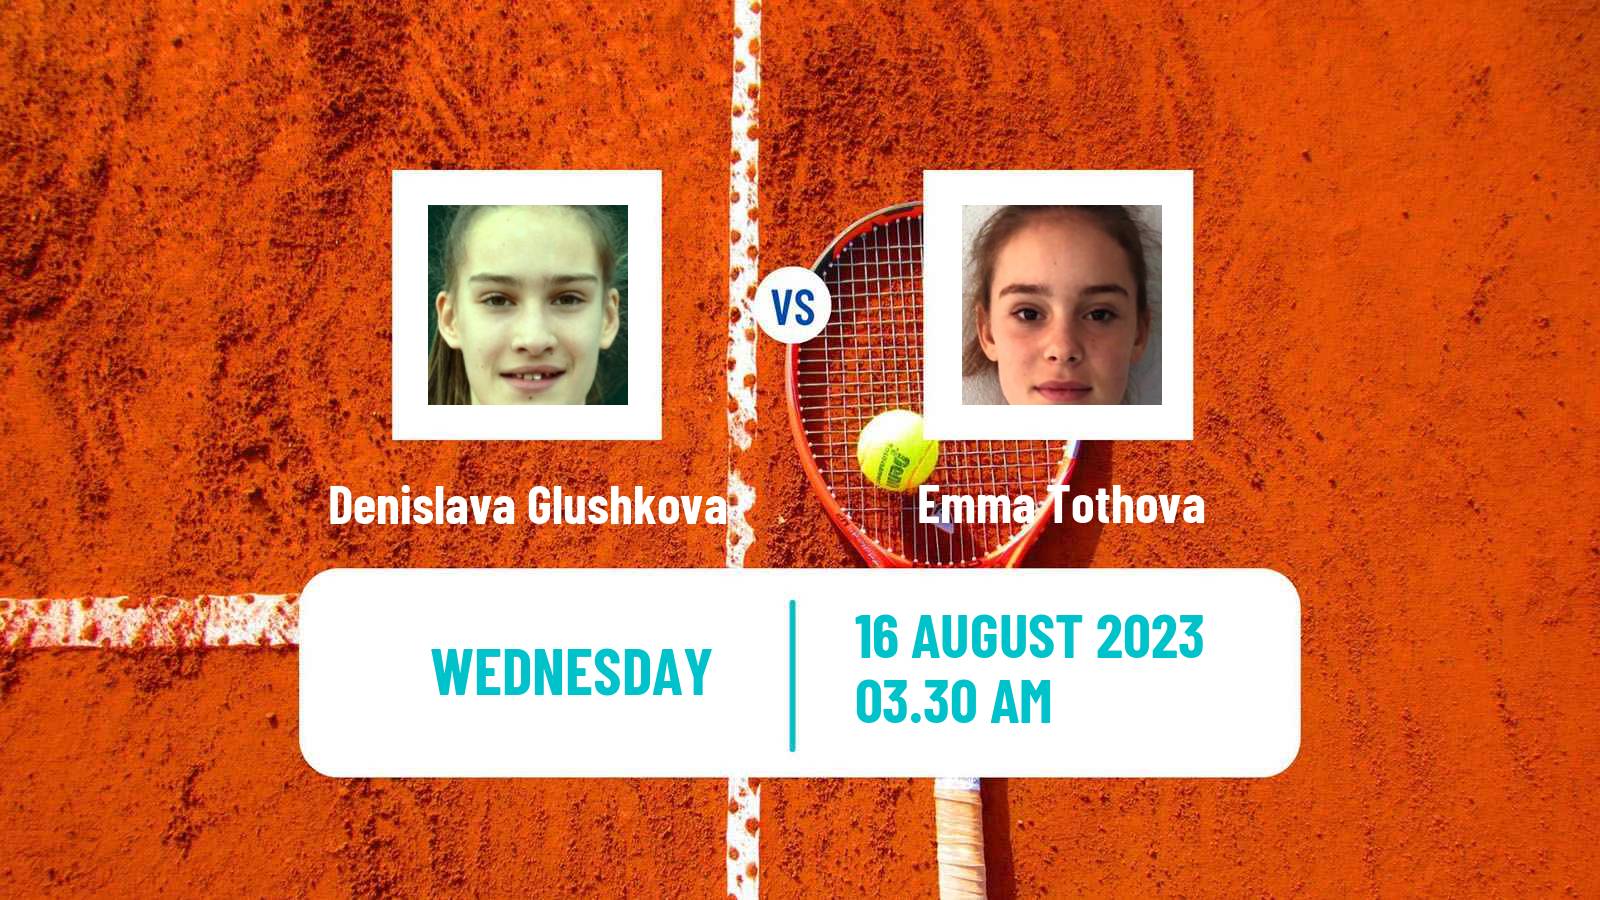 Tennis ITF W25 Vrnjacka Banja Women Denislava Glushkova - Emma Tothova